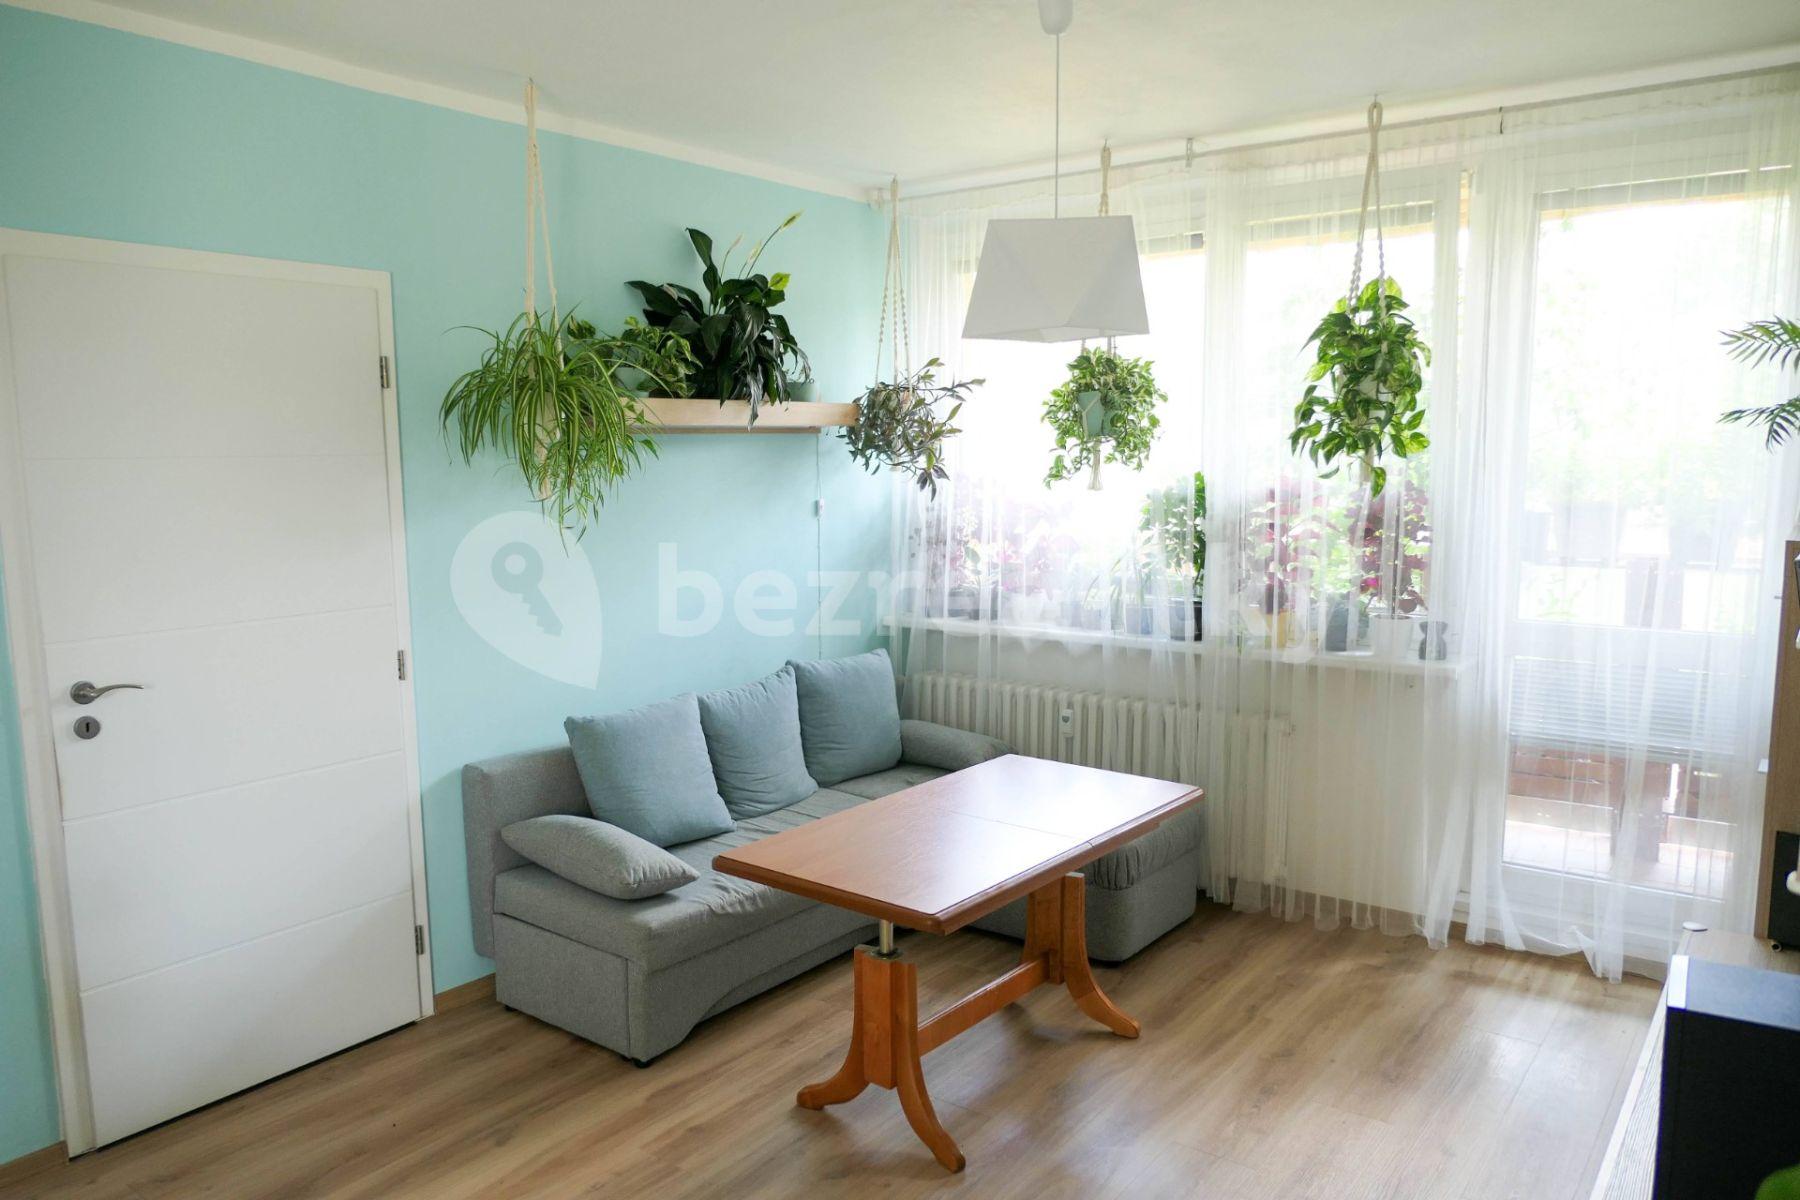 2 bedroom with open-plan kitchen flat to rent, 55 m², Litvínovská, Prague, Prague